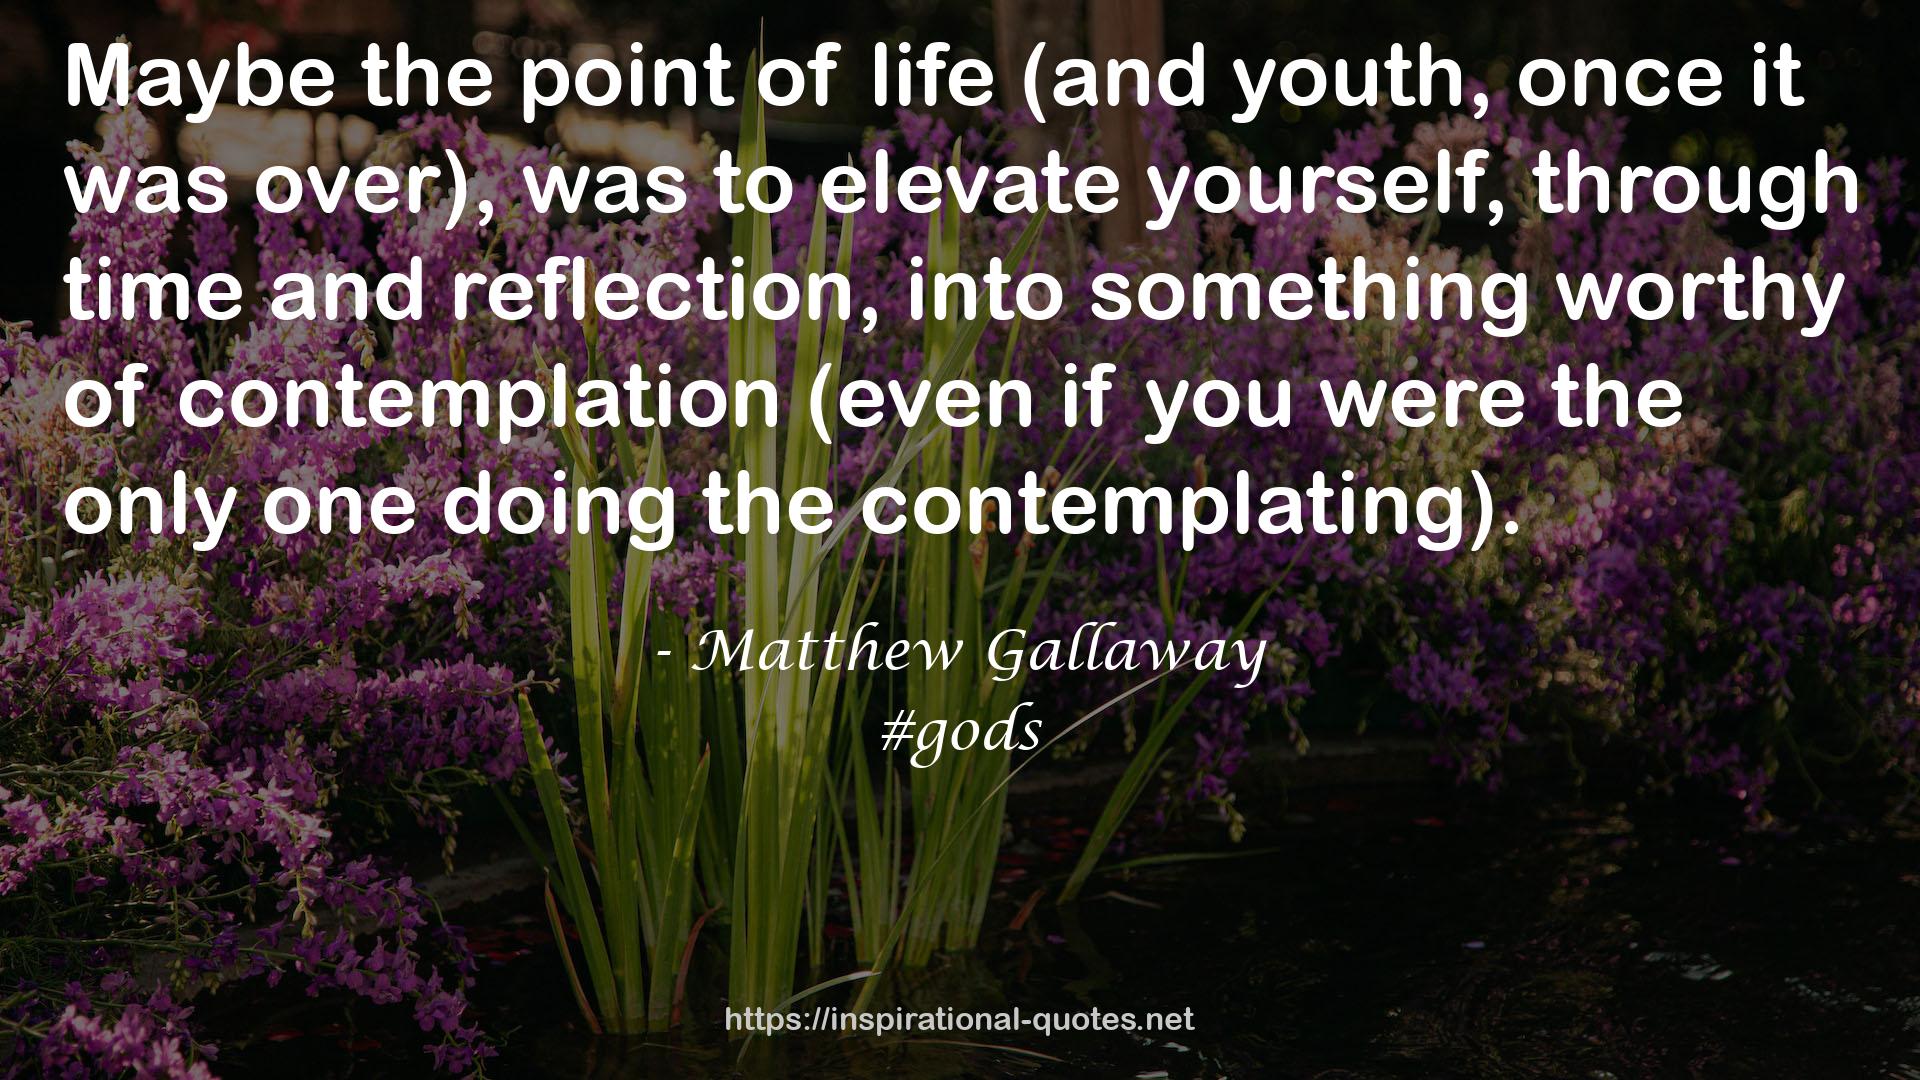 Matthew Gallaway QUOTES